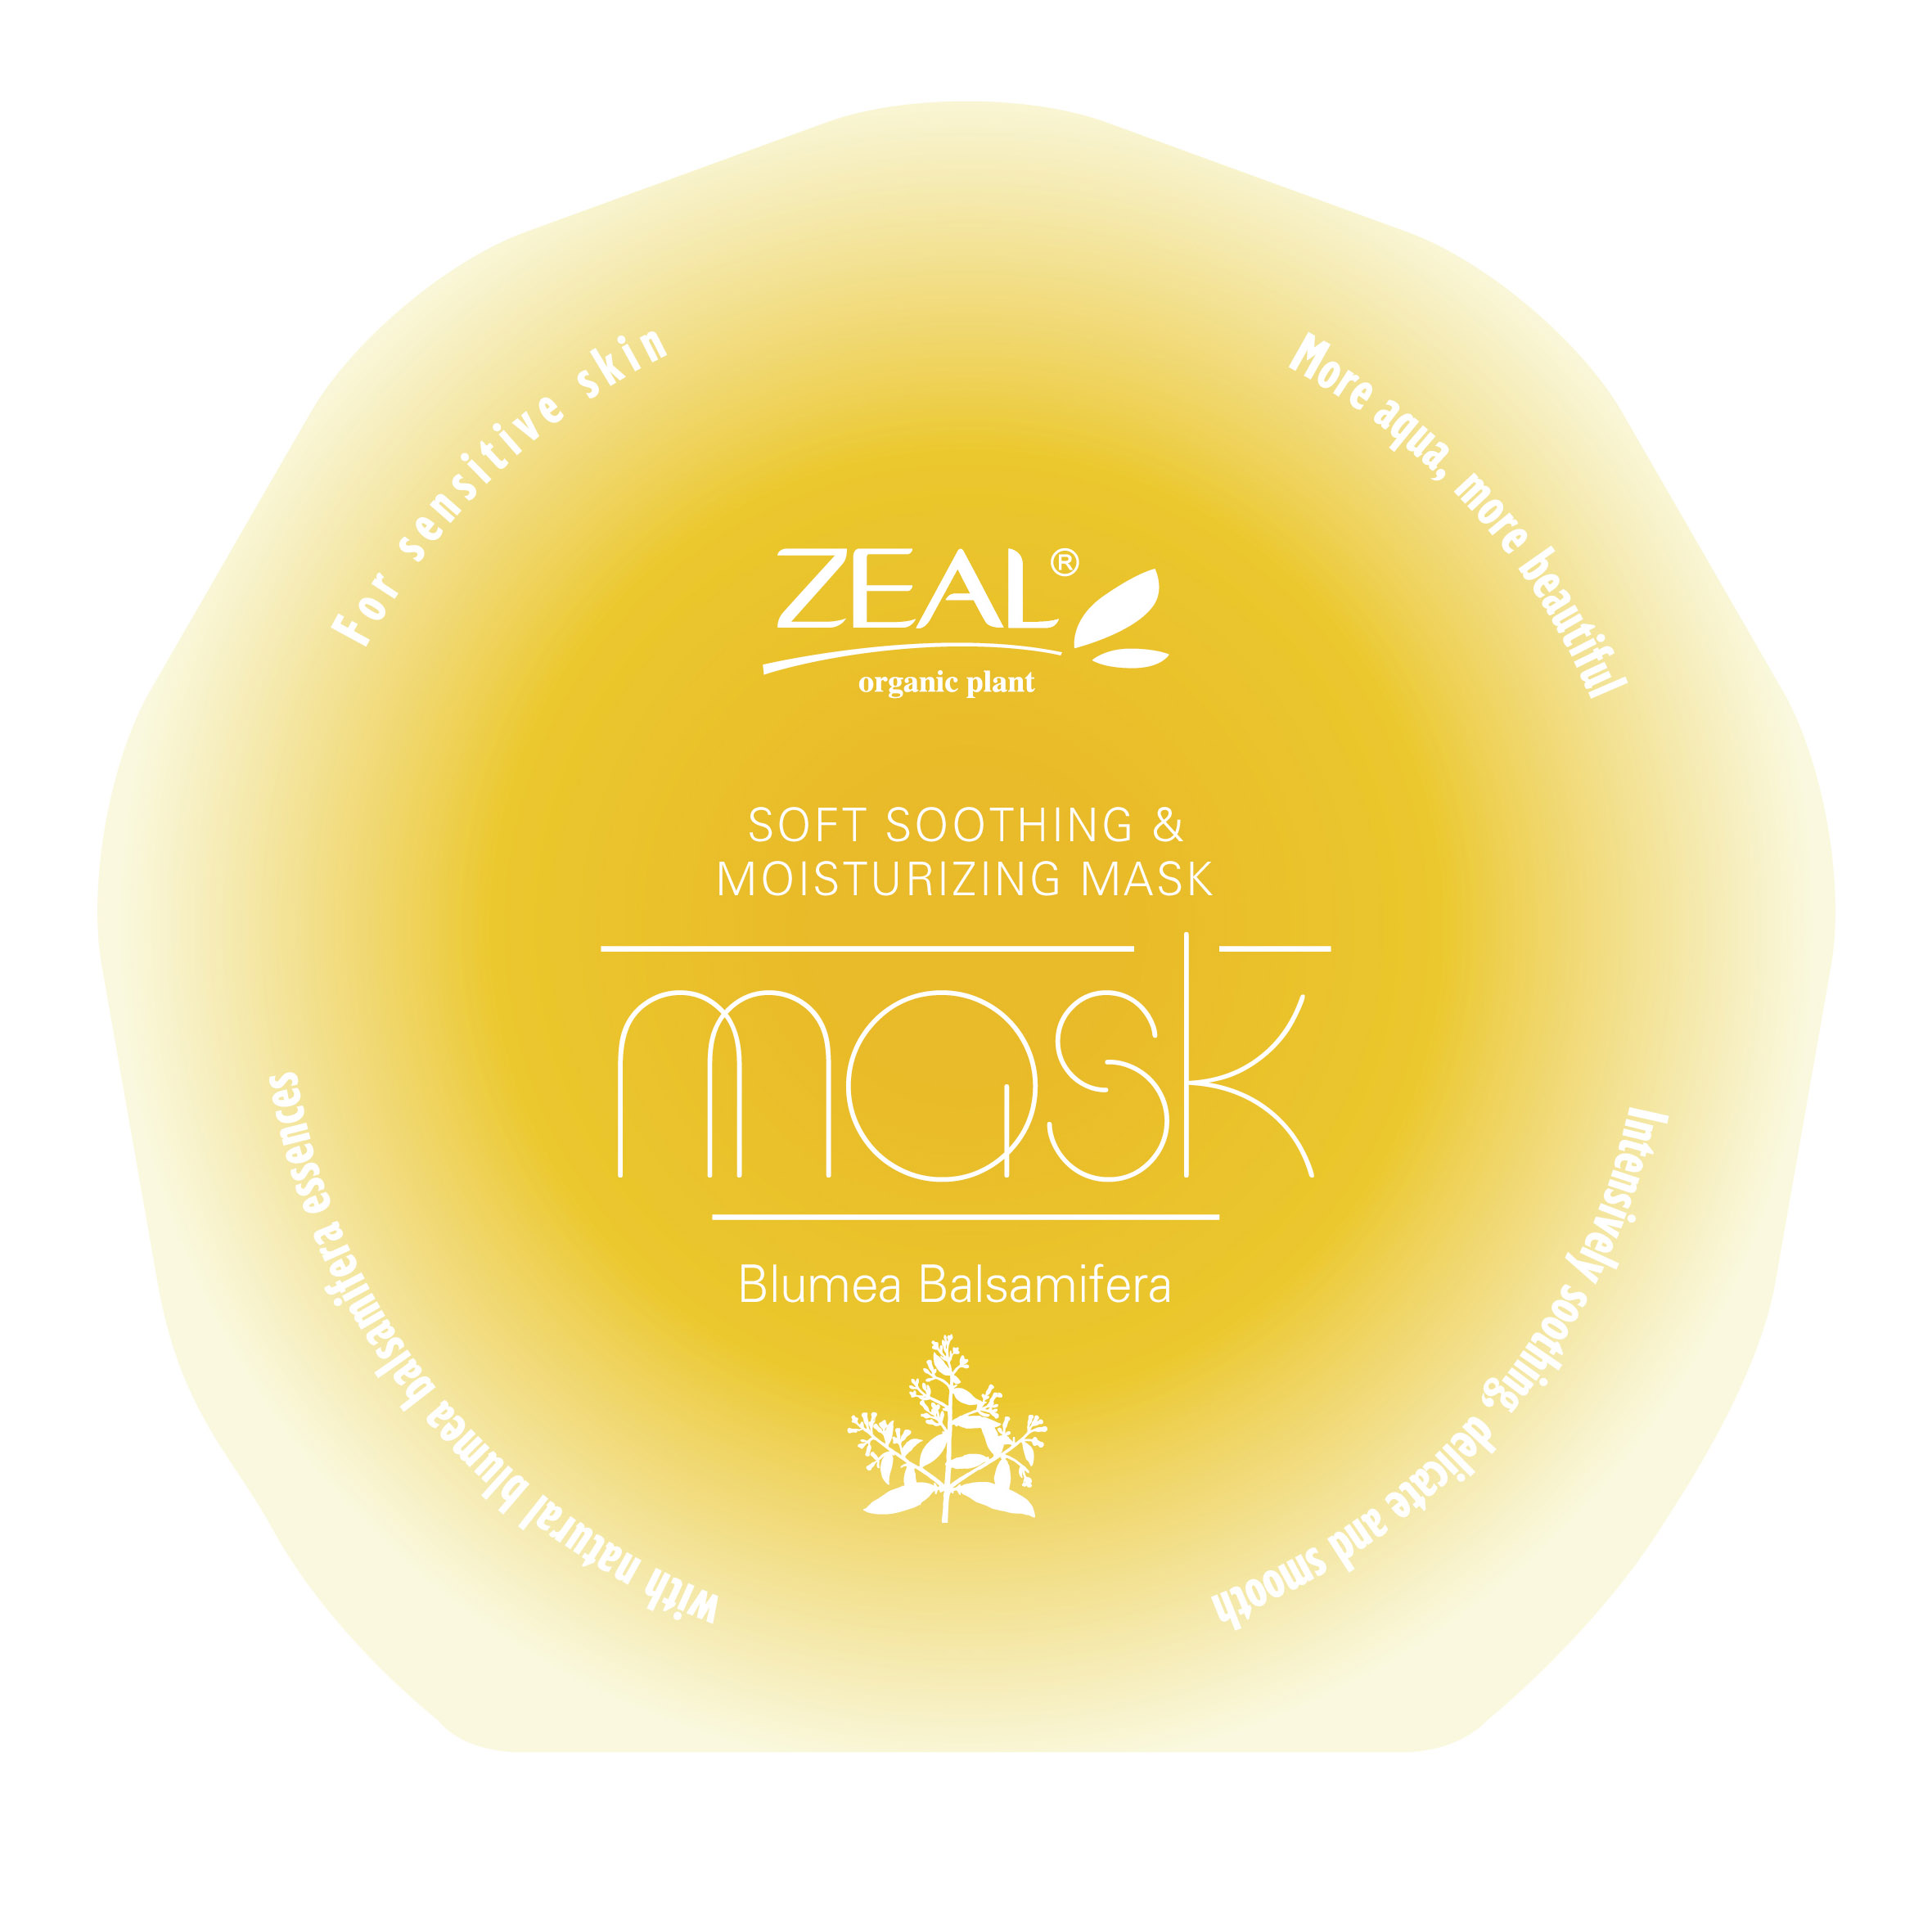 Zeal Natural Plant Soft Soothing & Moisturizing Blumea Balsamifera Facial Mask 25g